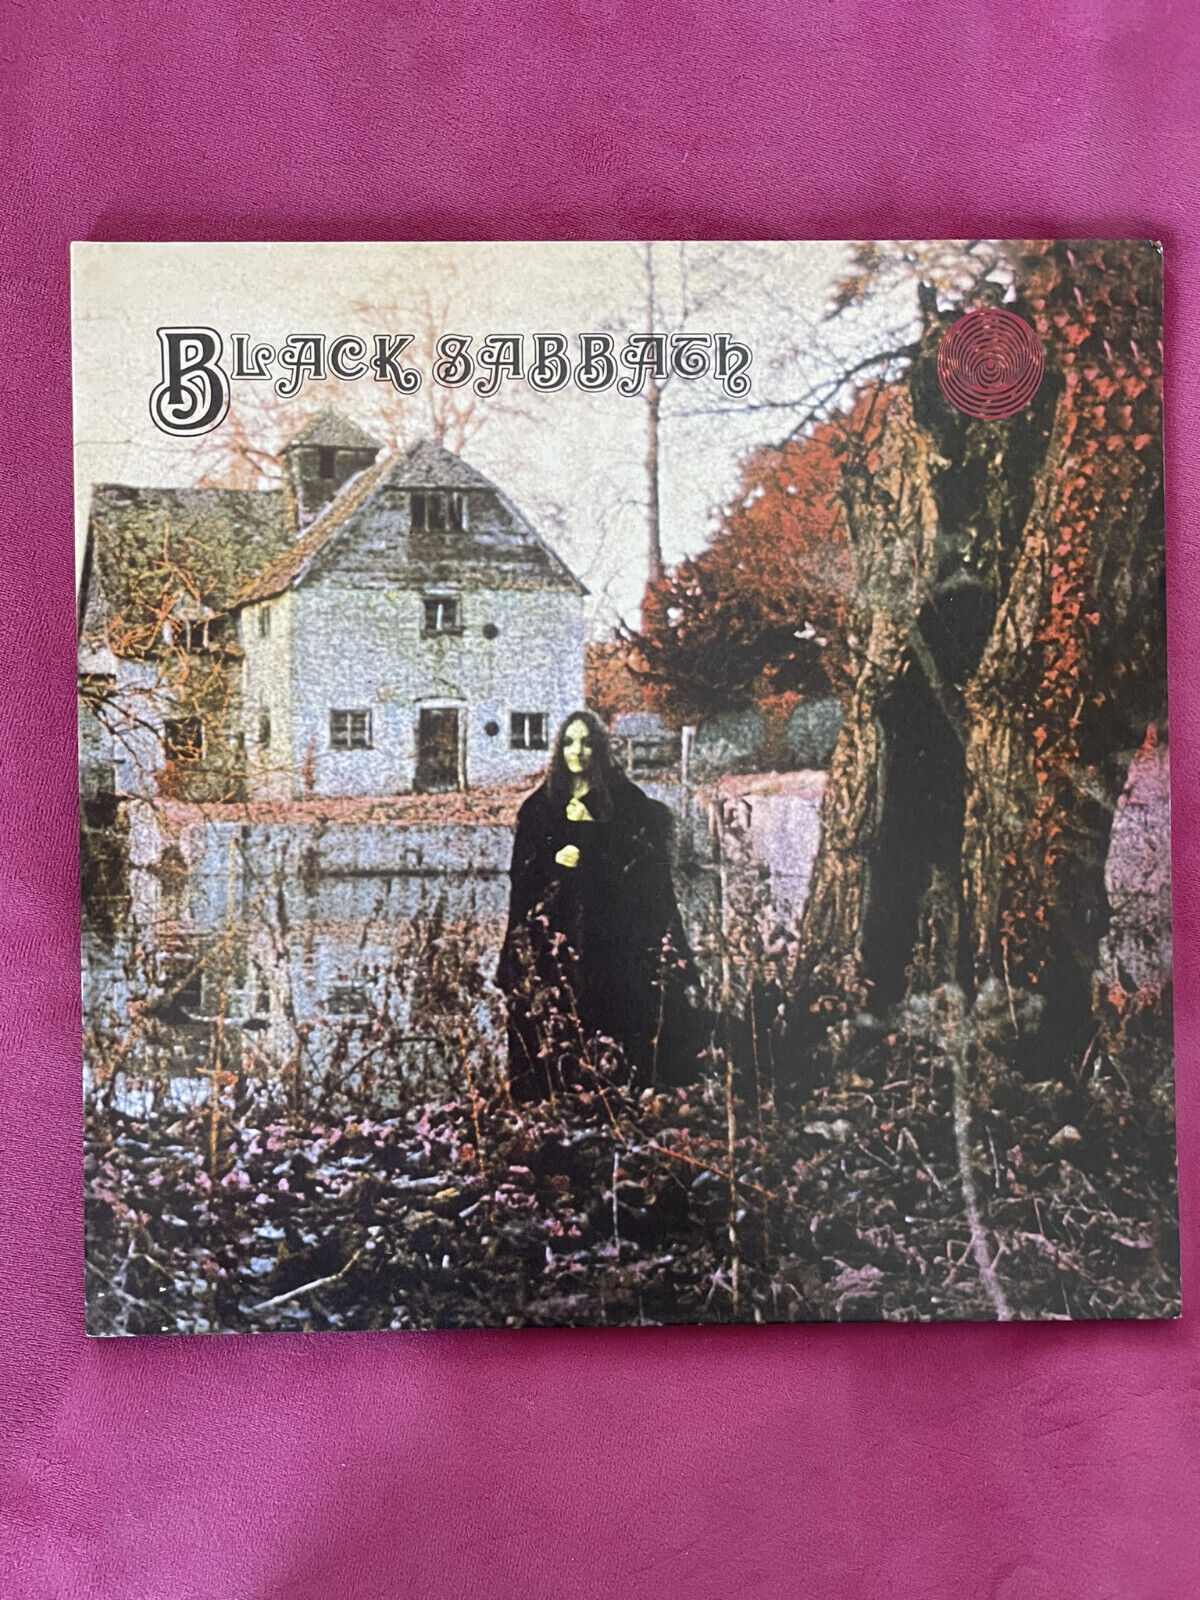 Black Sabbath - Black Sabbath Reissue Vinyl LP Album